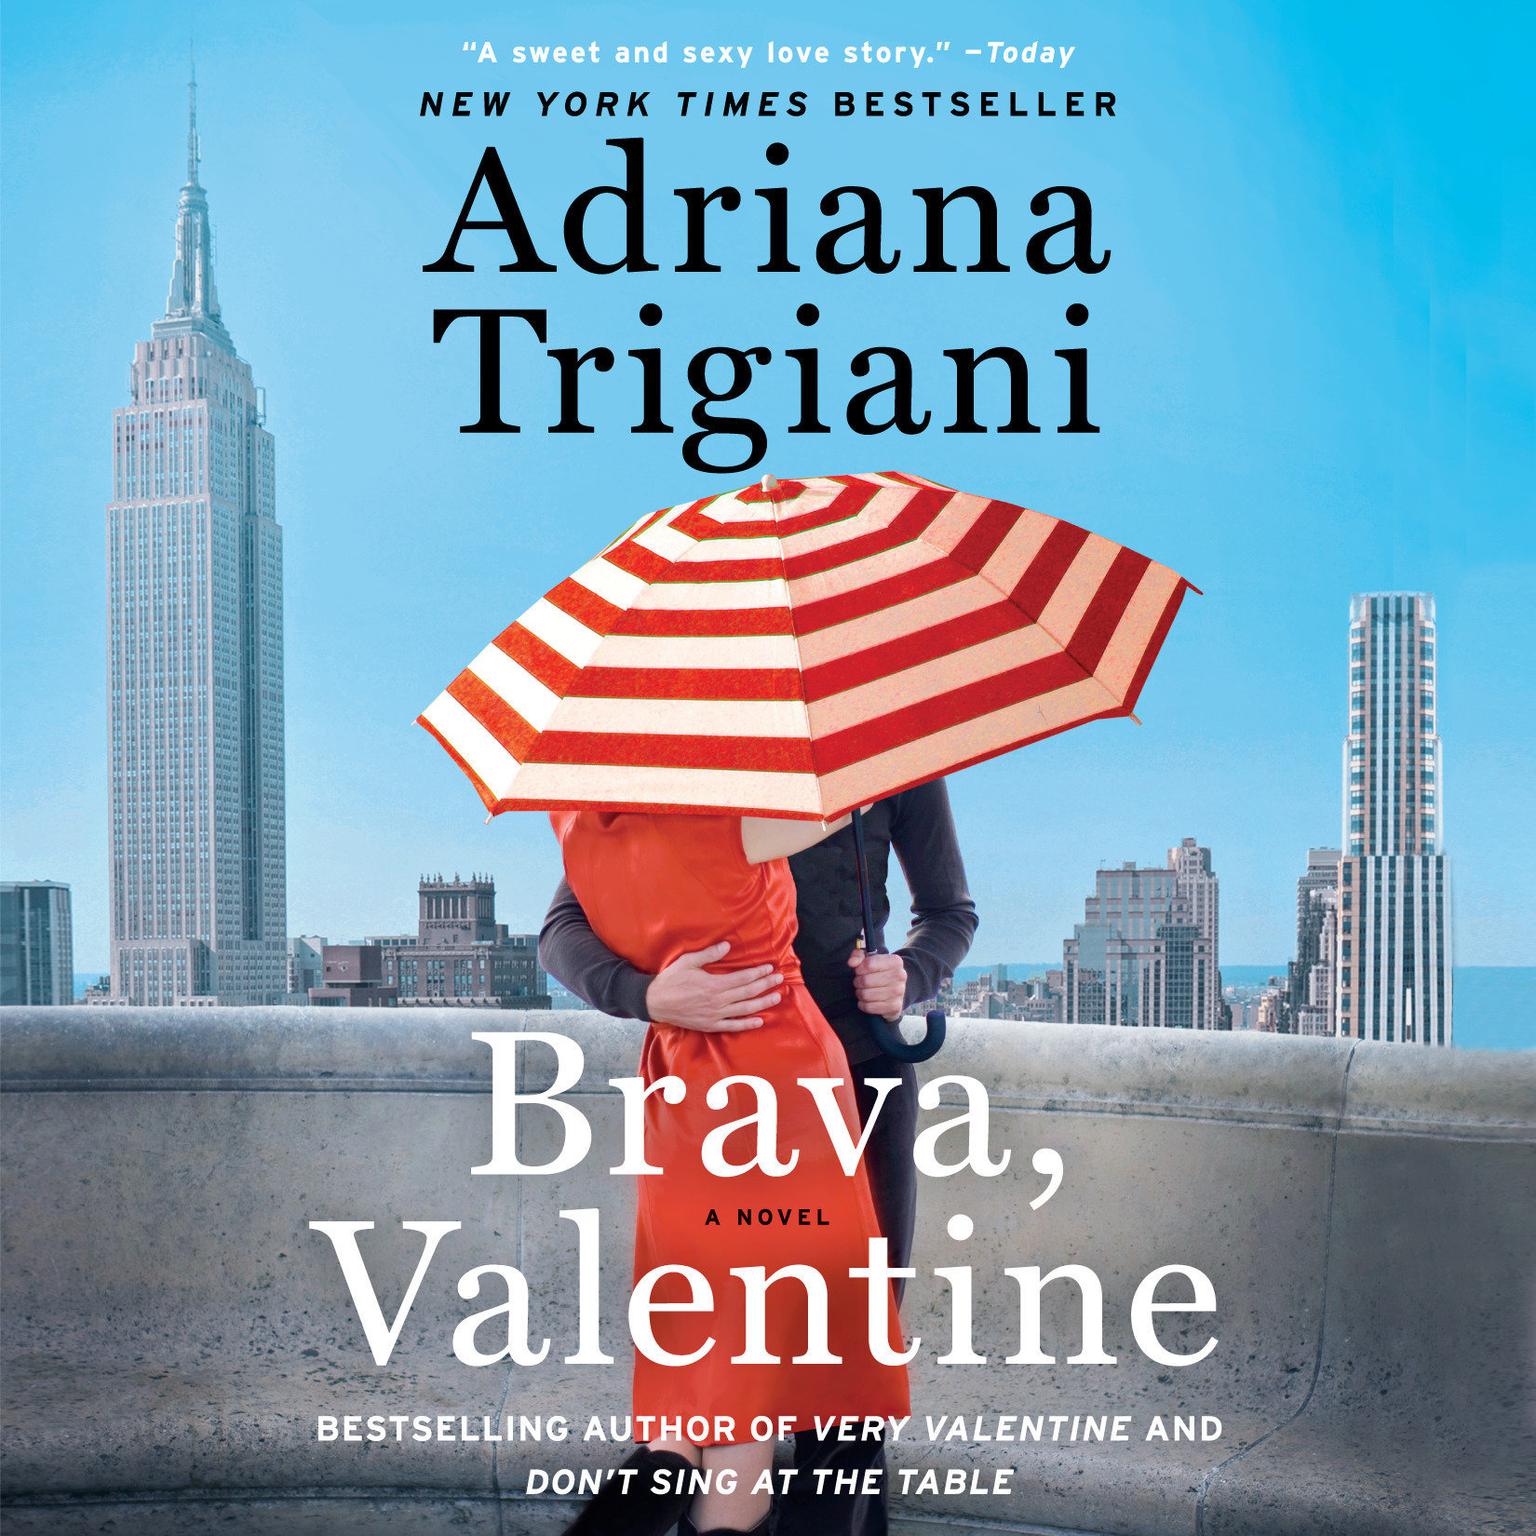 Brava, Valentine: A Novel Audiobook, by Adriana Trigiani